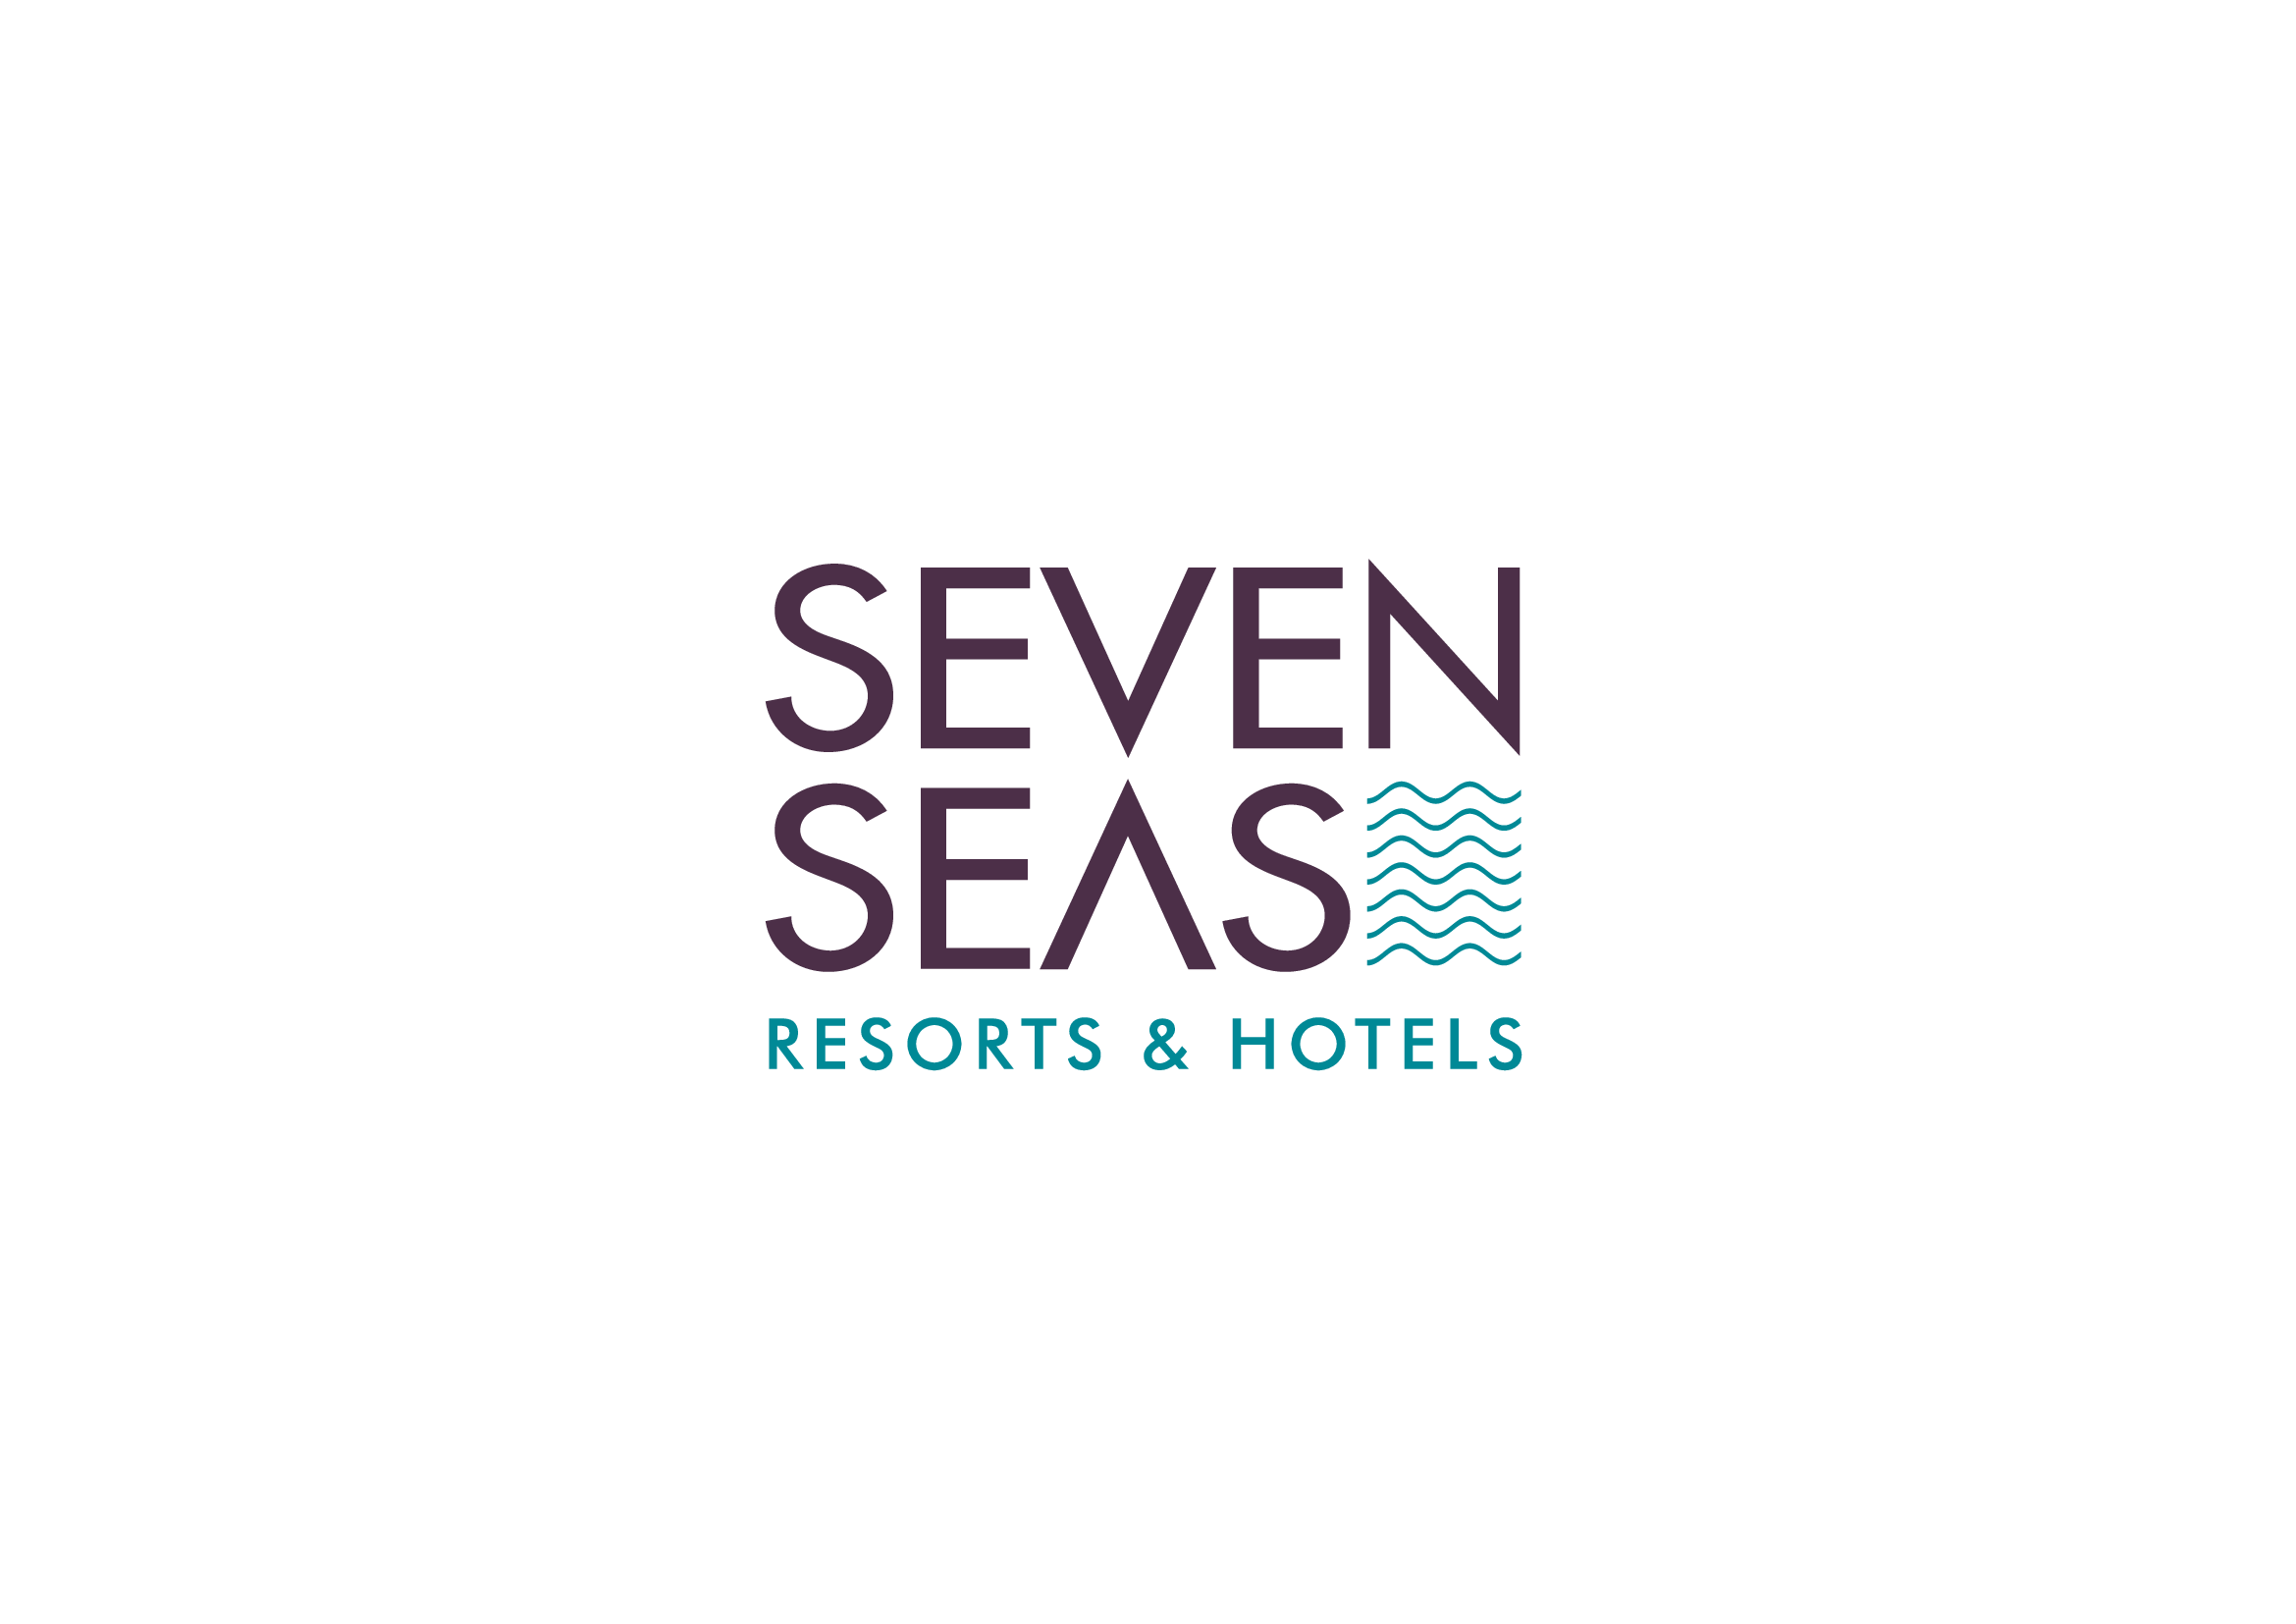 Seven Seas Resort & Hotels